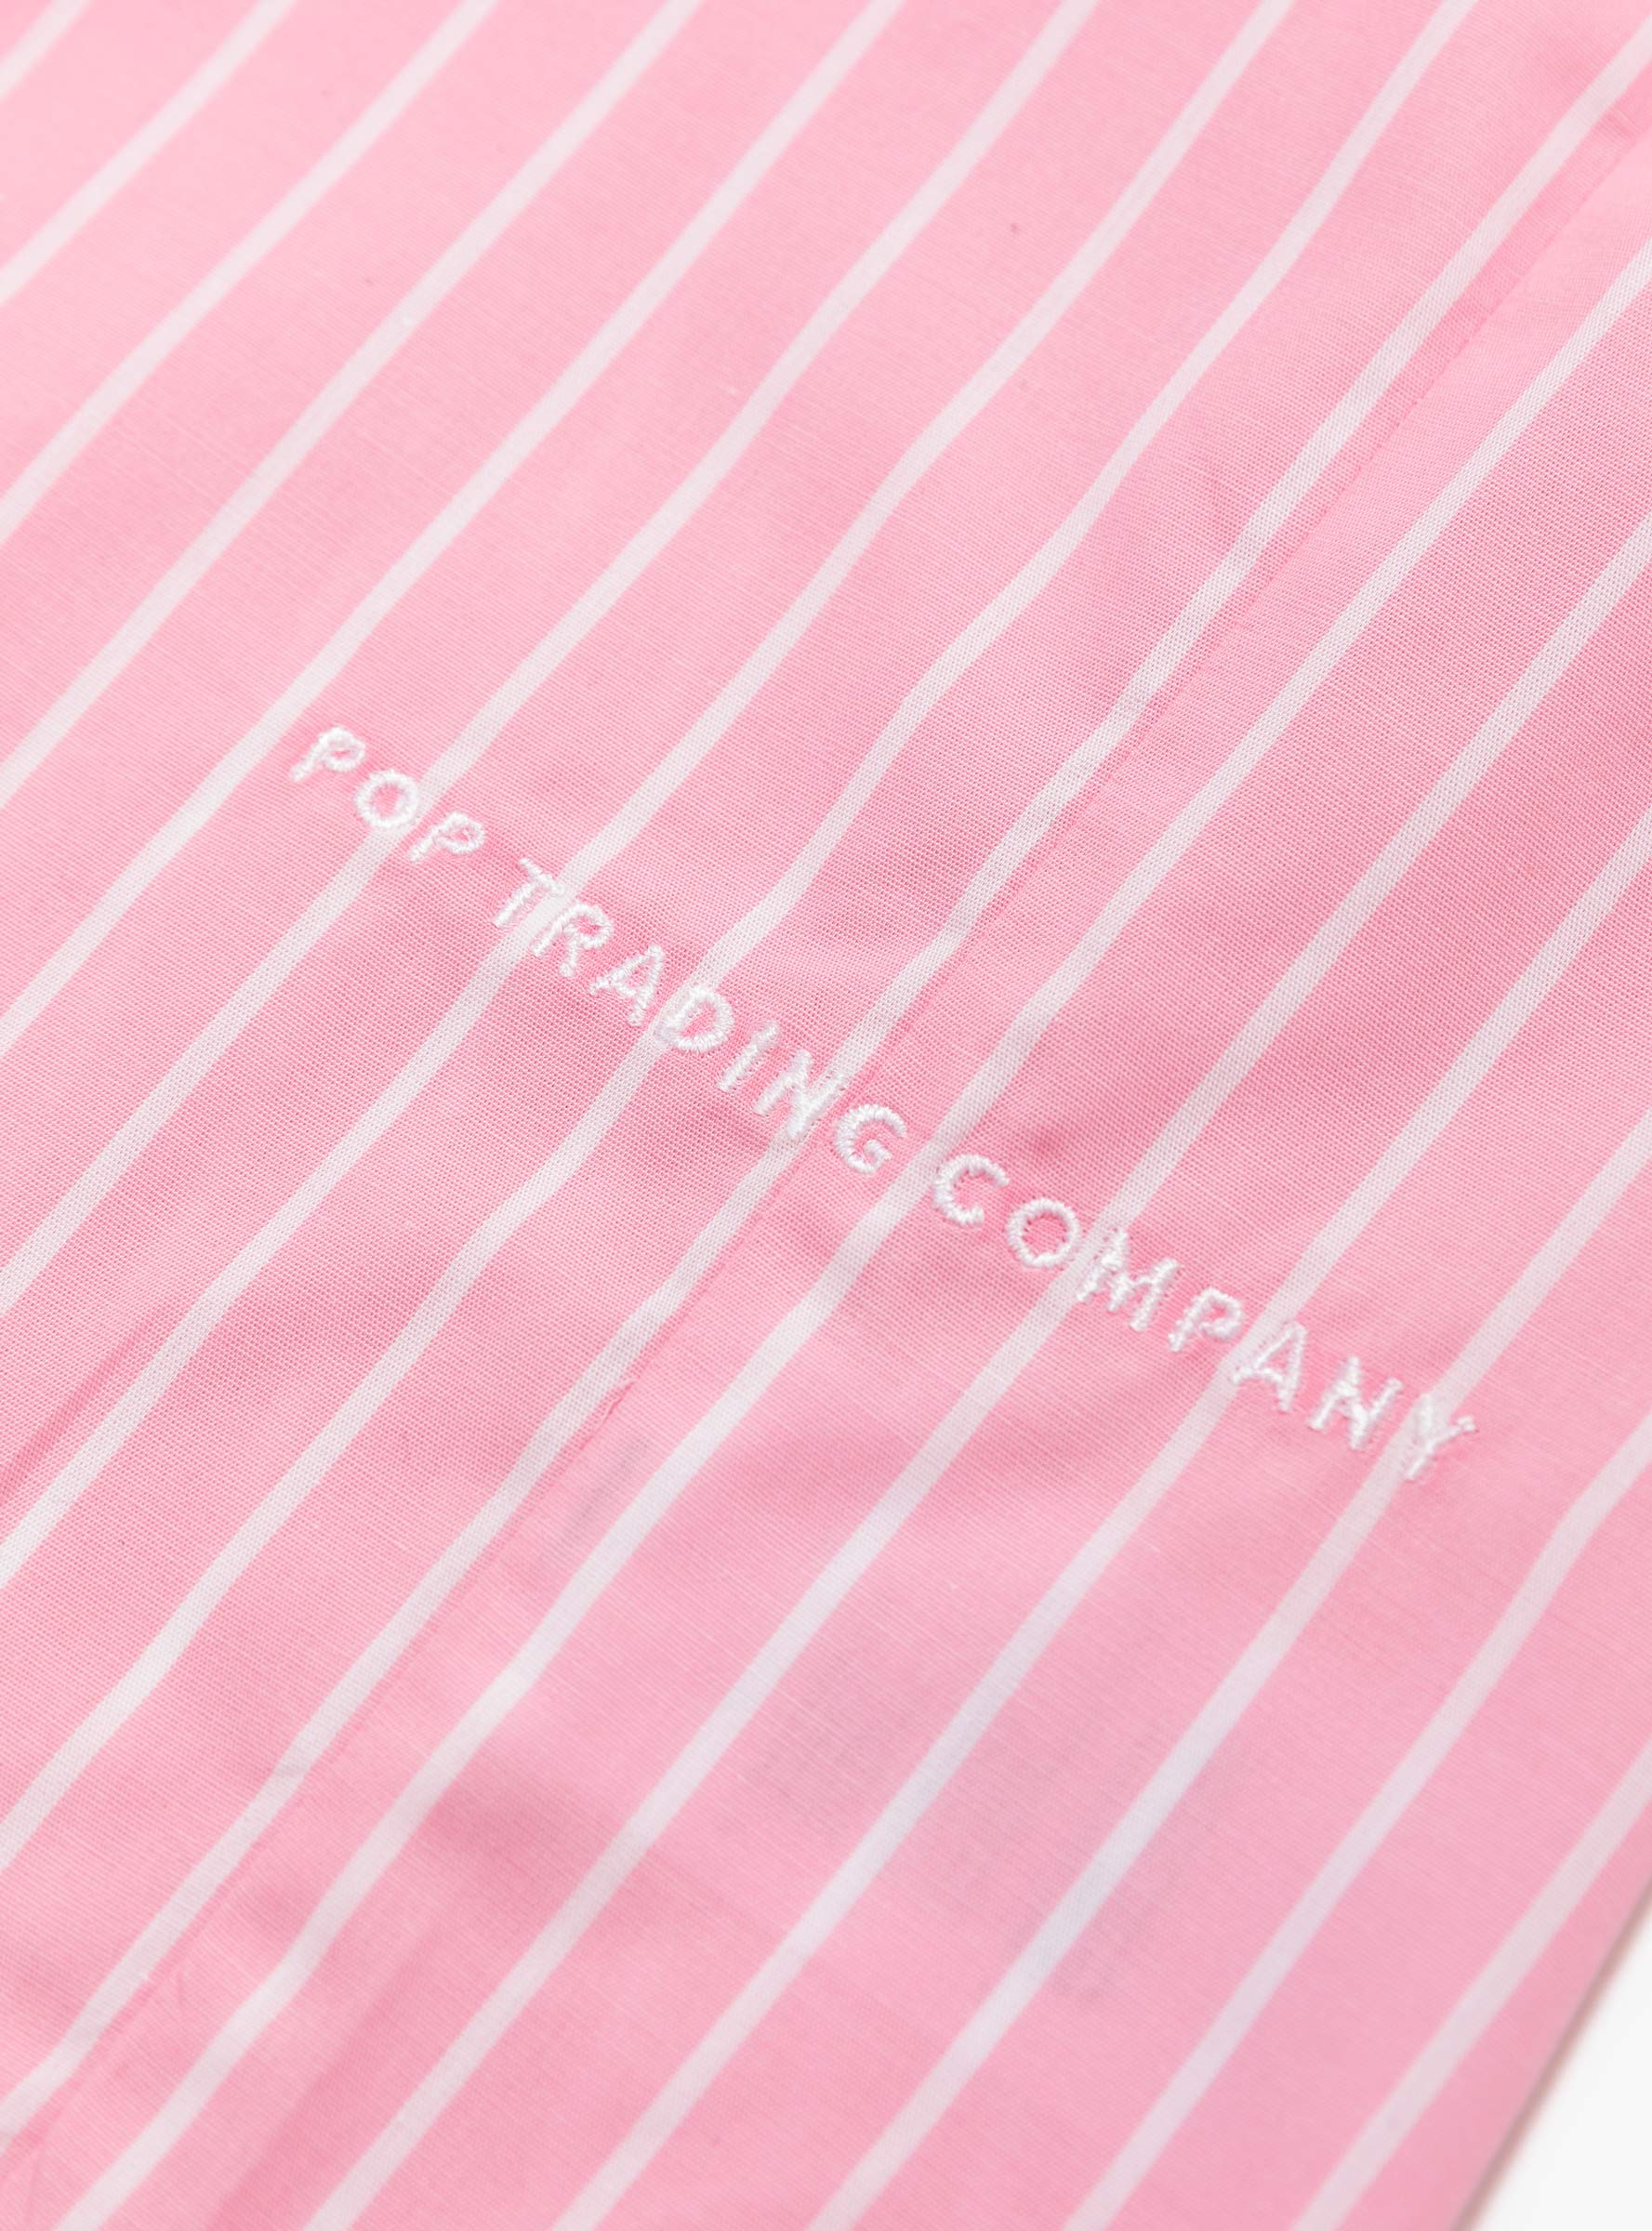 Pop Trading Company Pop Trading Company Logo Striped Shirt Pink - Size: XL